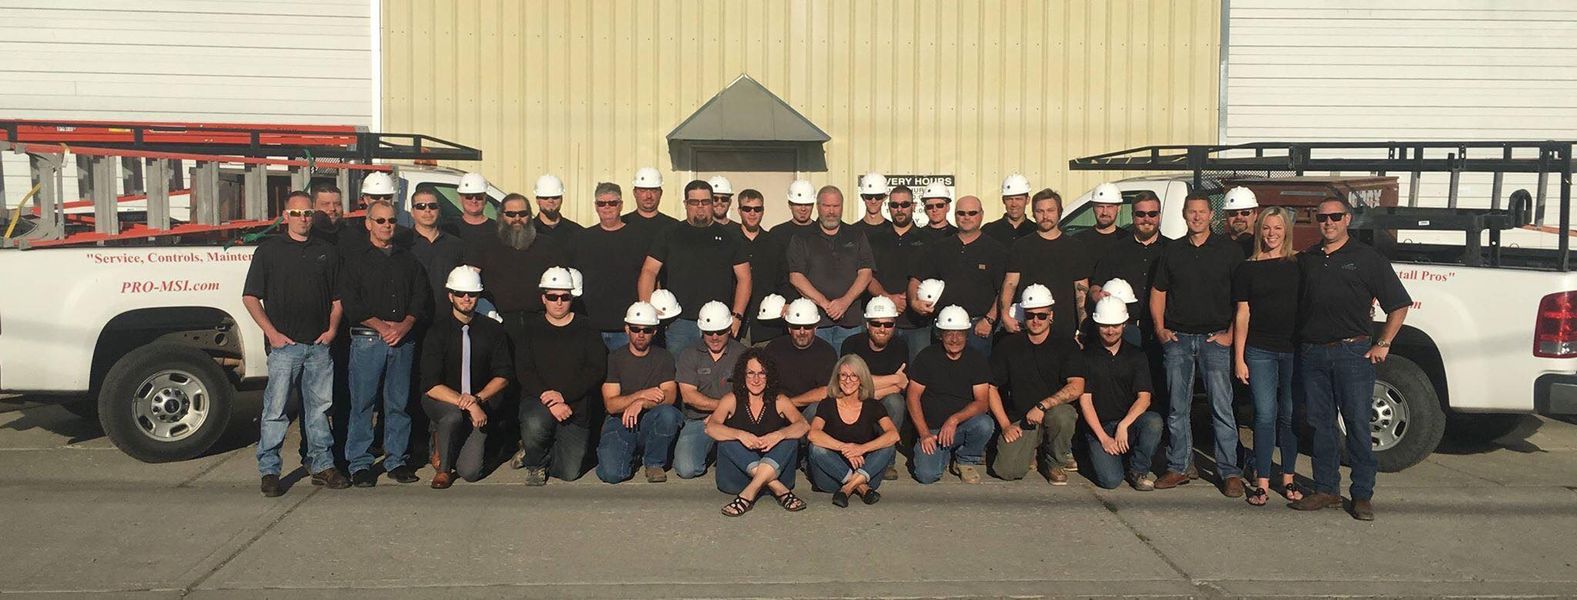 Pro MSI Team, Hvac and Electrician Jobs in Spokane